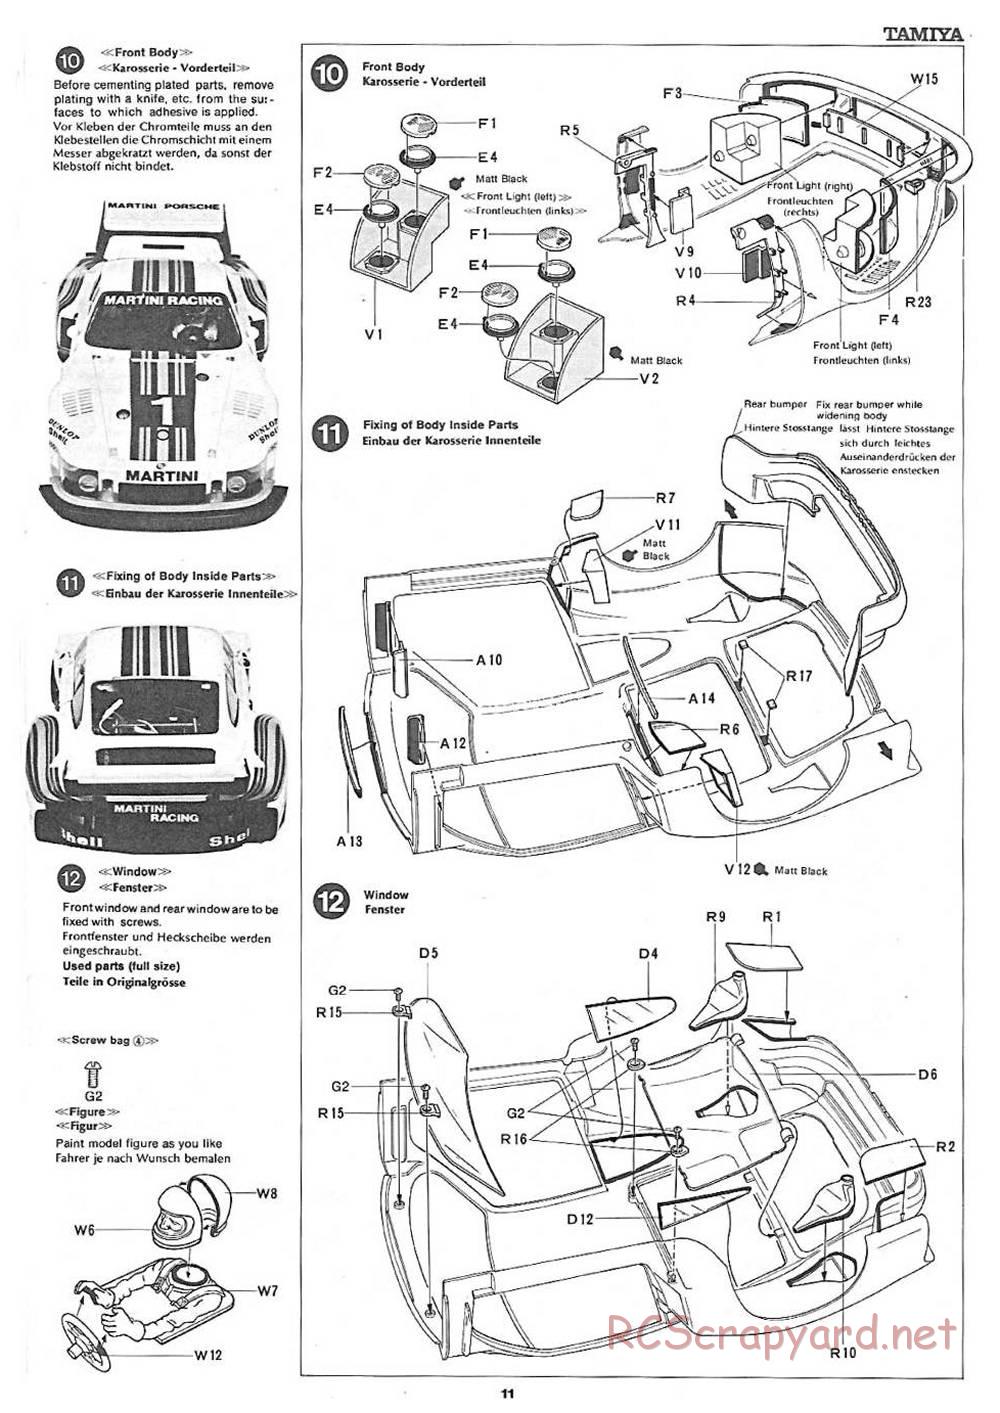 Tamiya - Martini Porsche 935 Turbo - 58002 - Manual - Page 11